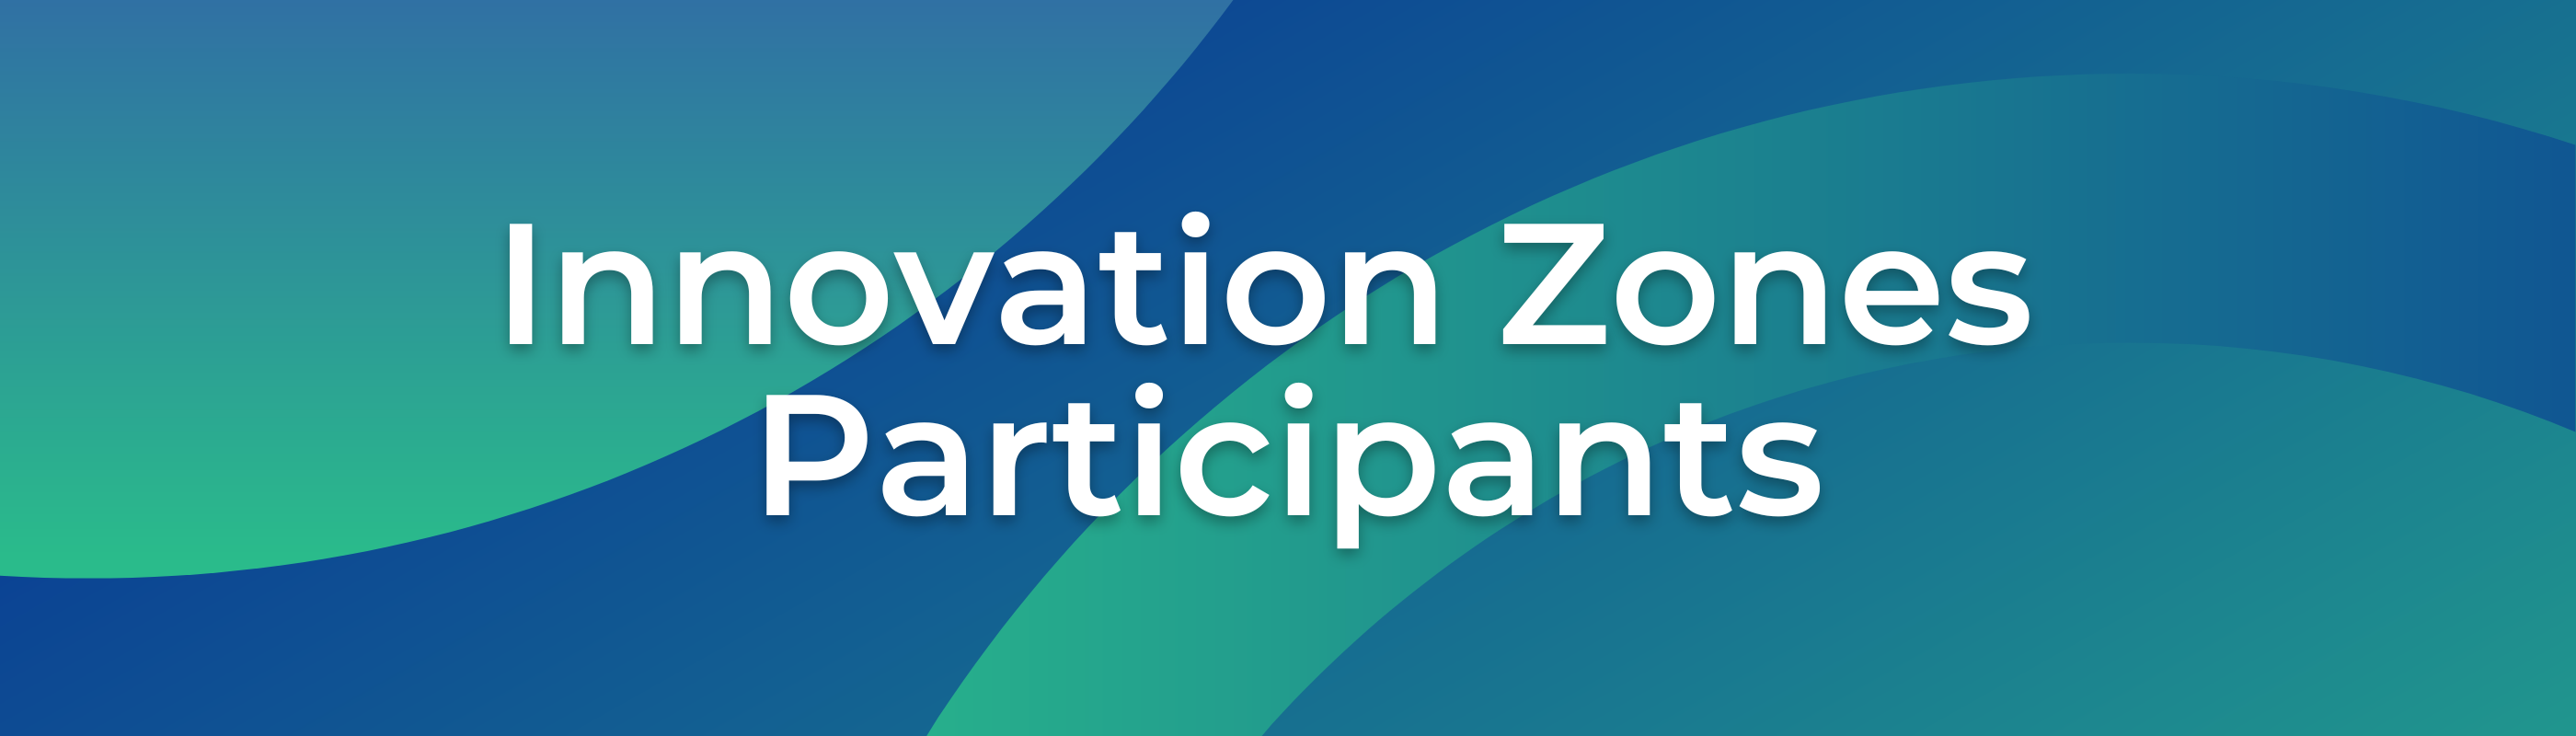 Innovation Zones Participants